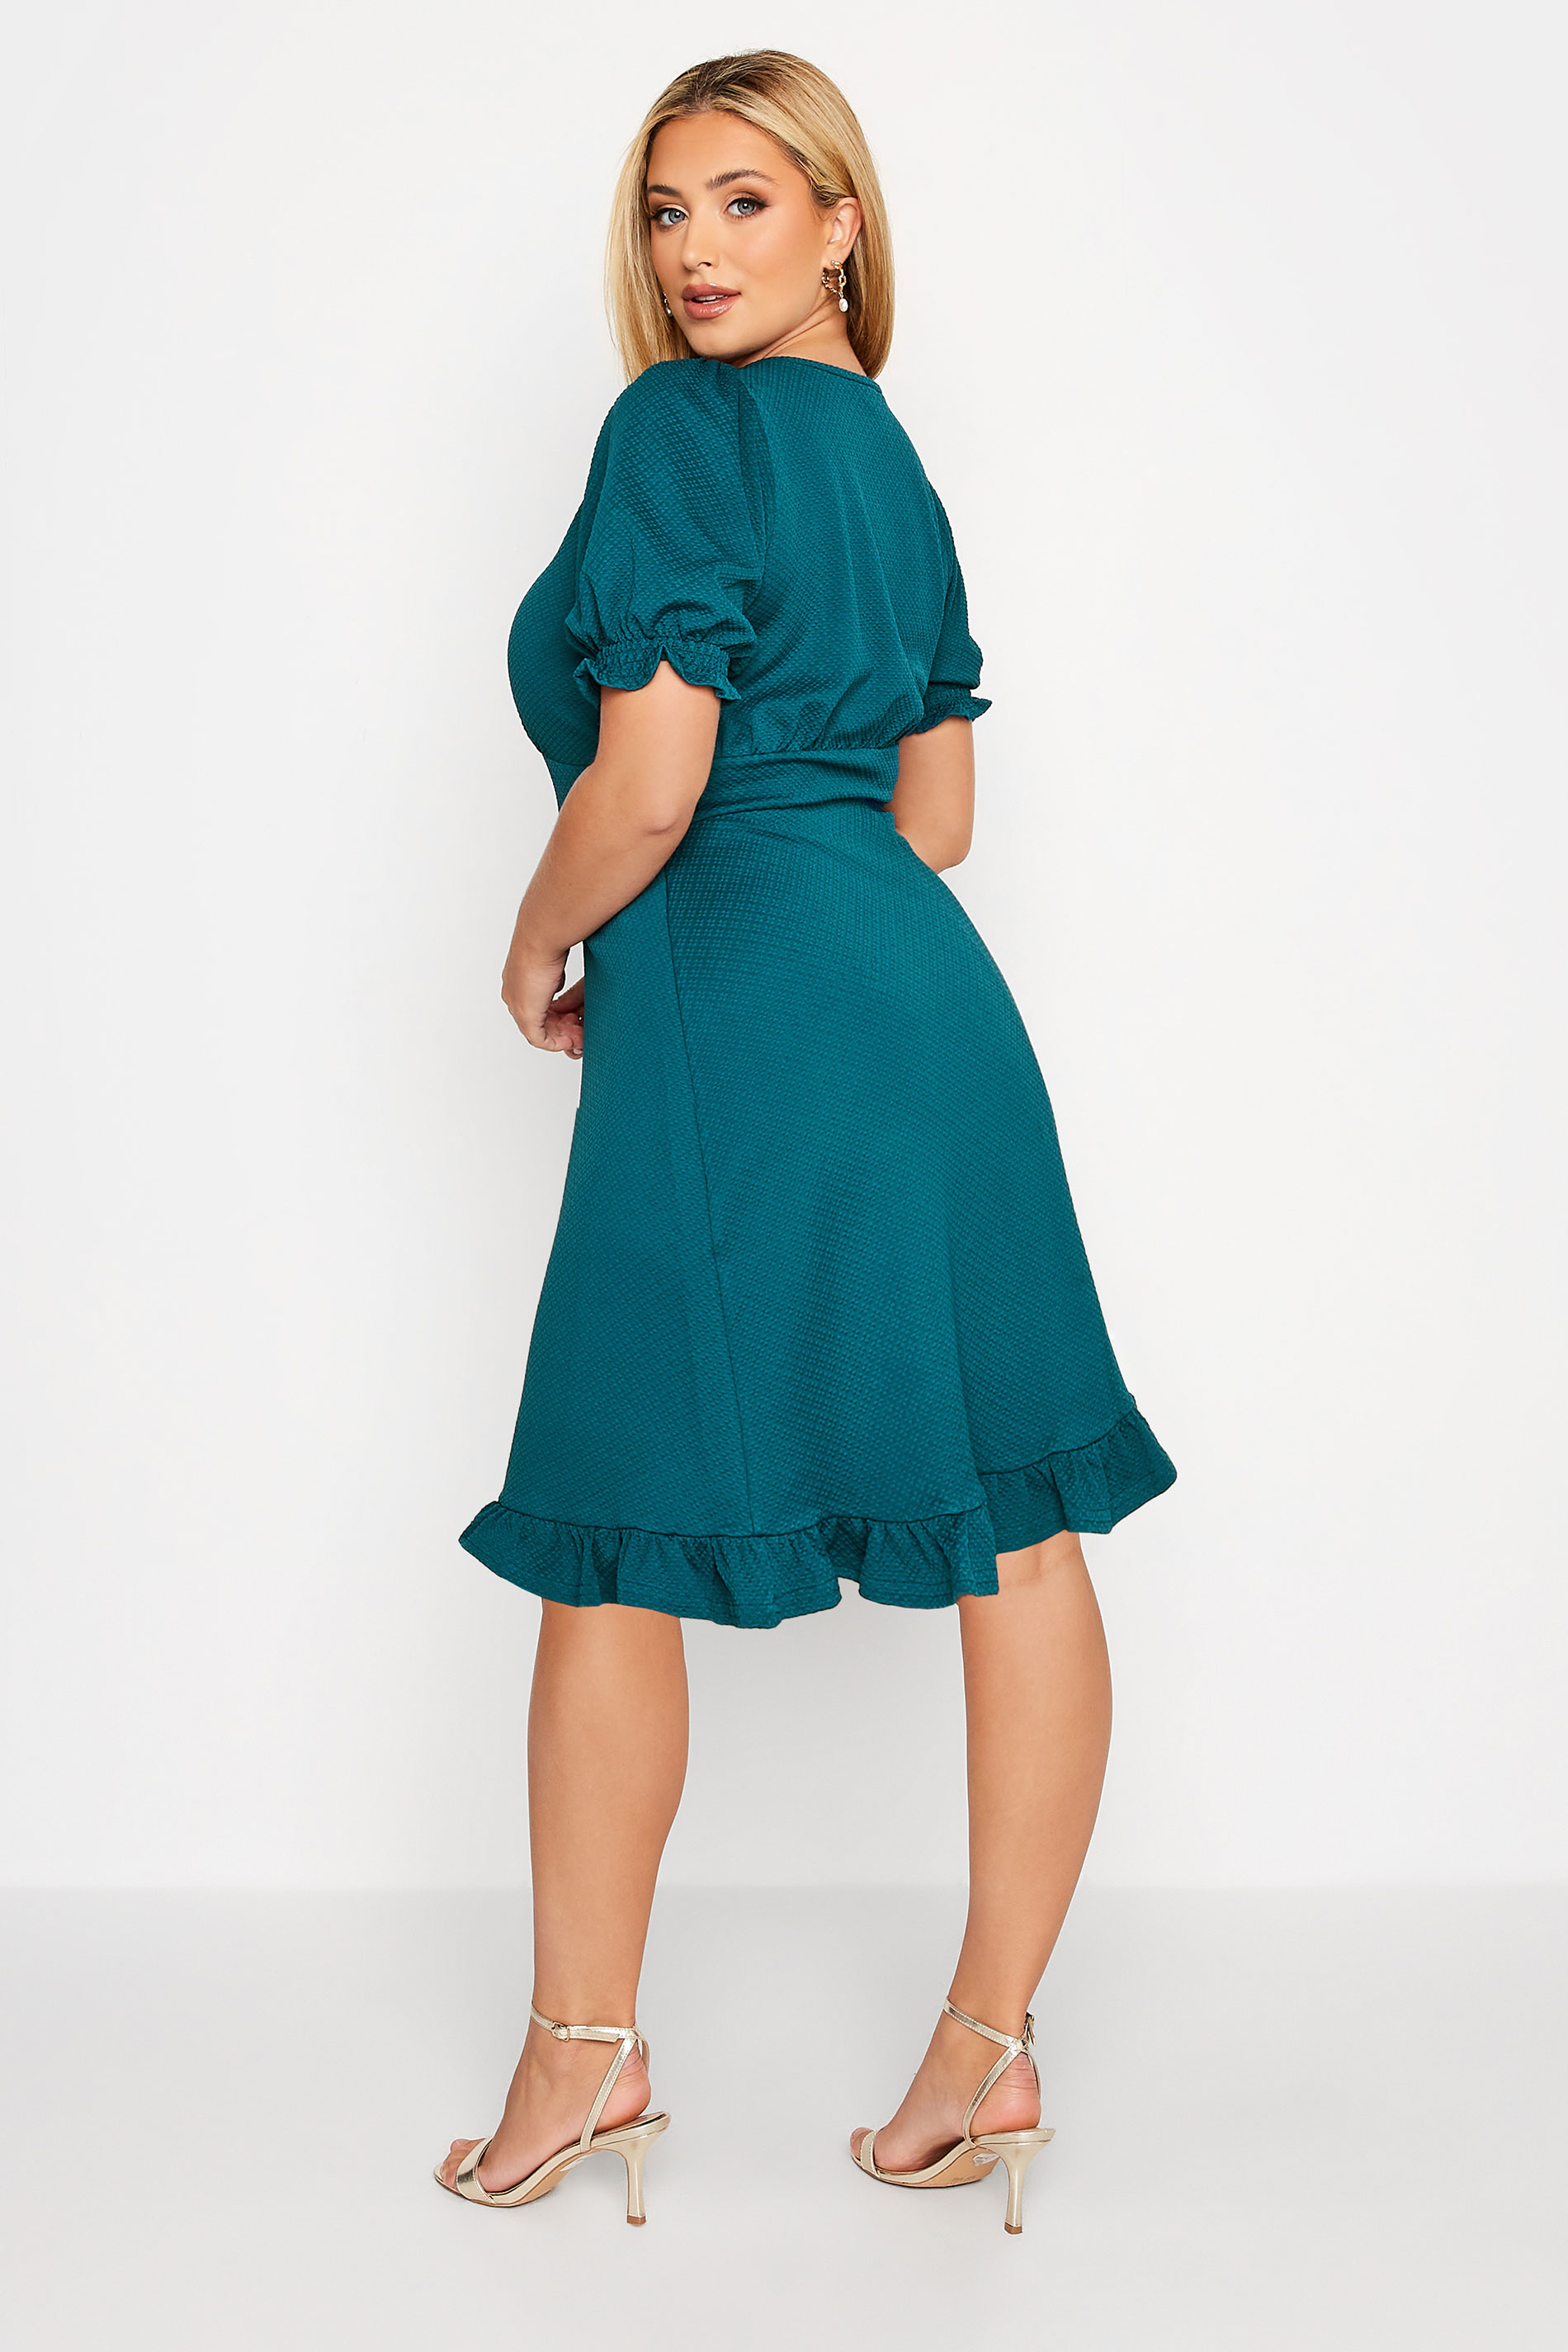 Curve Plus Size Teal Blue Ruffle Hem Mini Dress | Yours Clothing 3